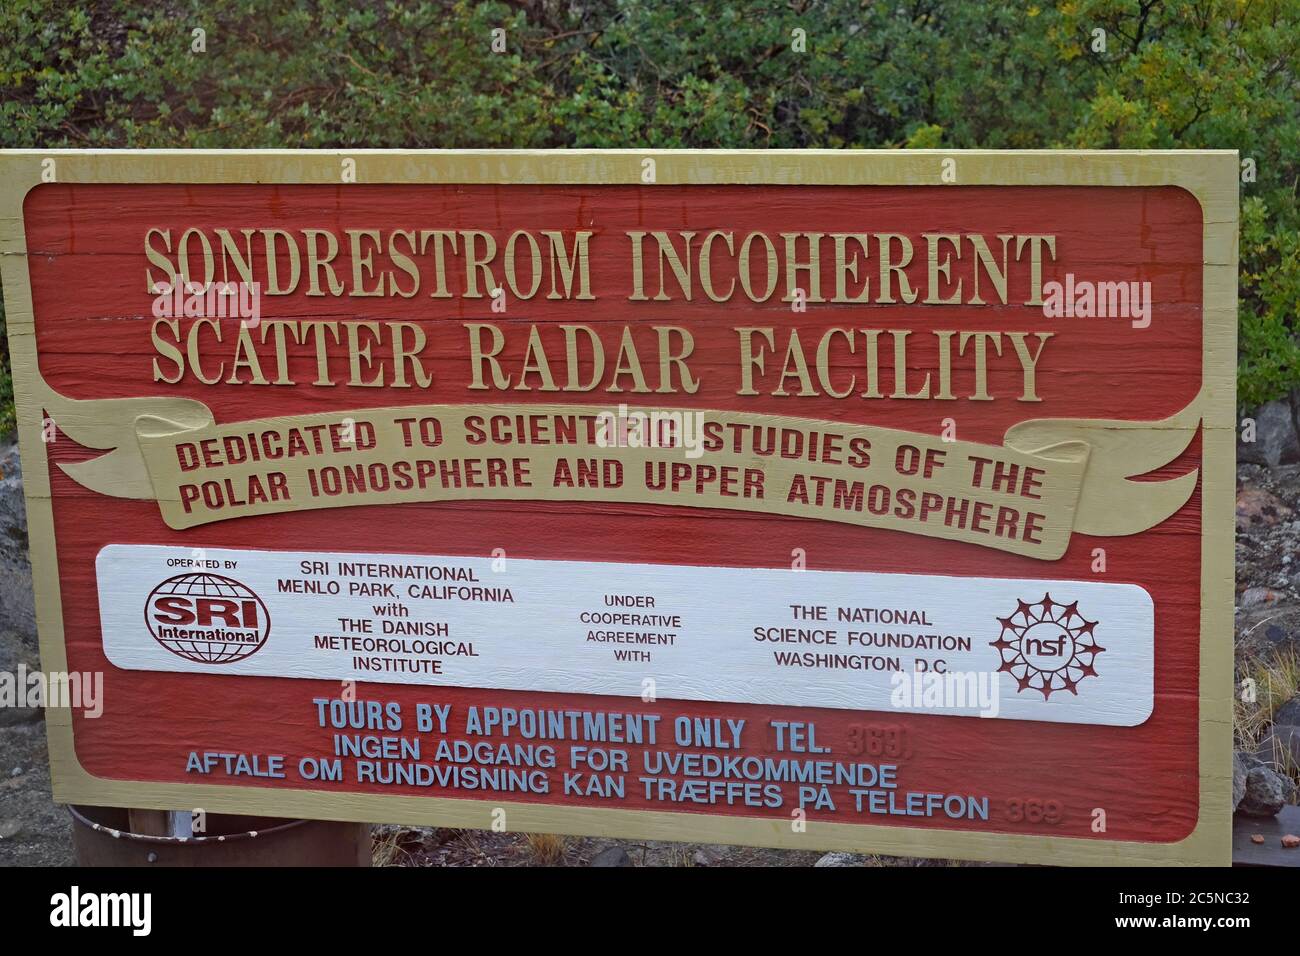 Sondrestrom Incoherent Scatter Radar facility, Stock Photo